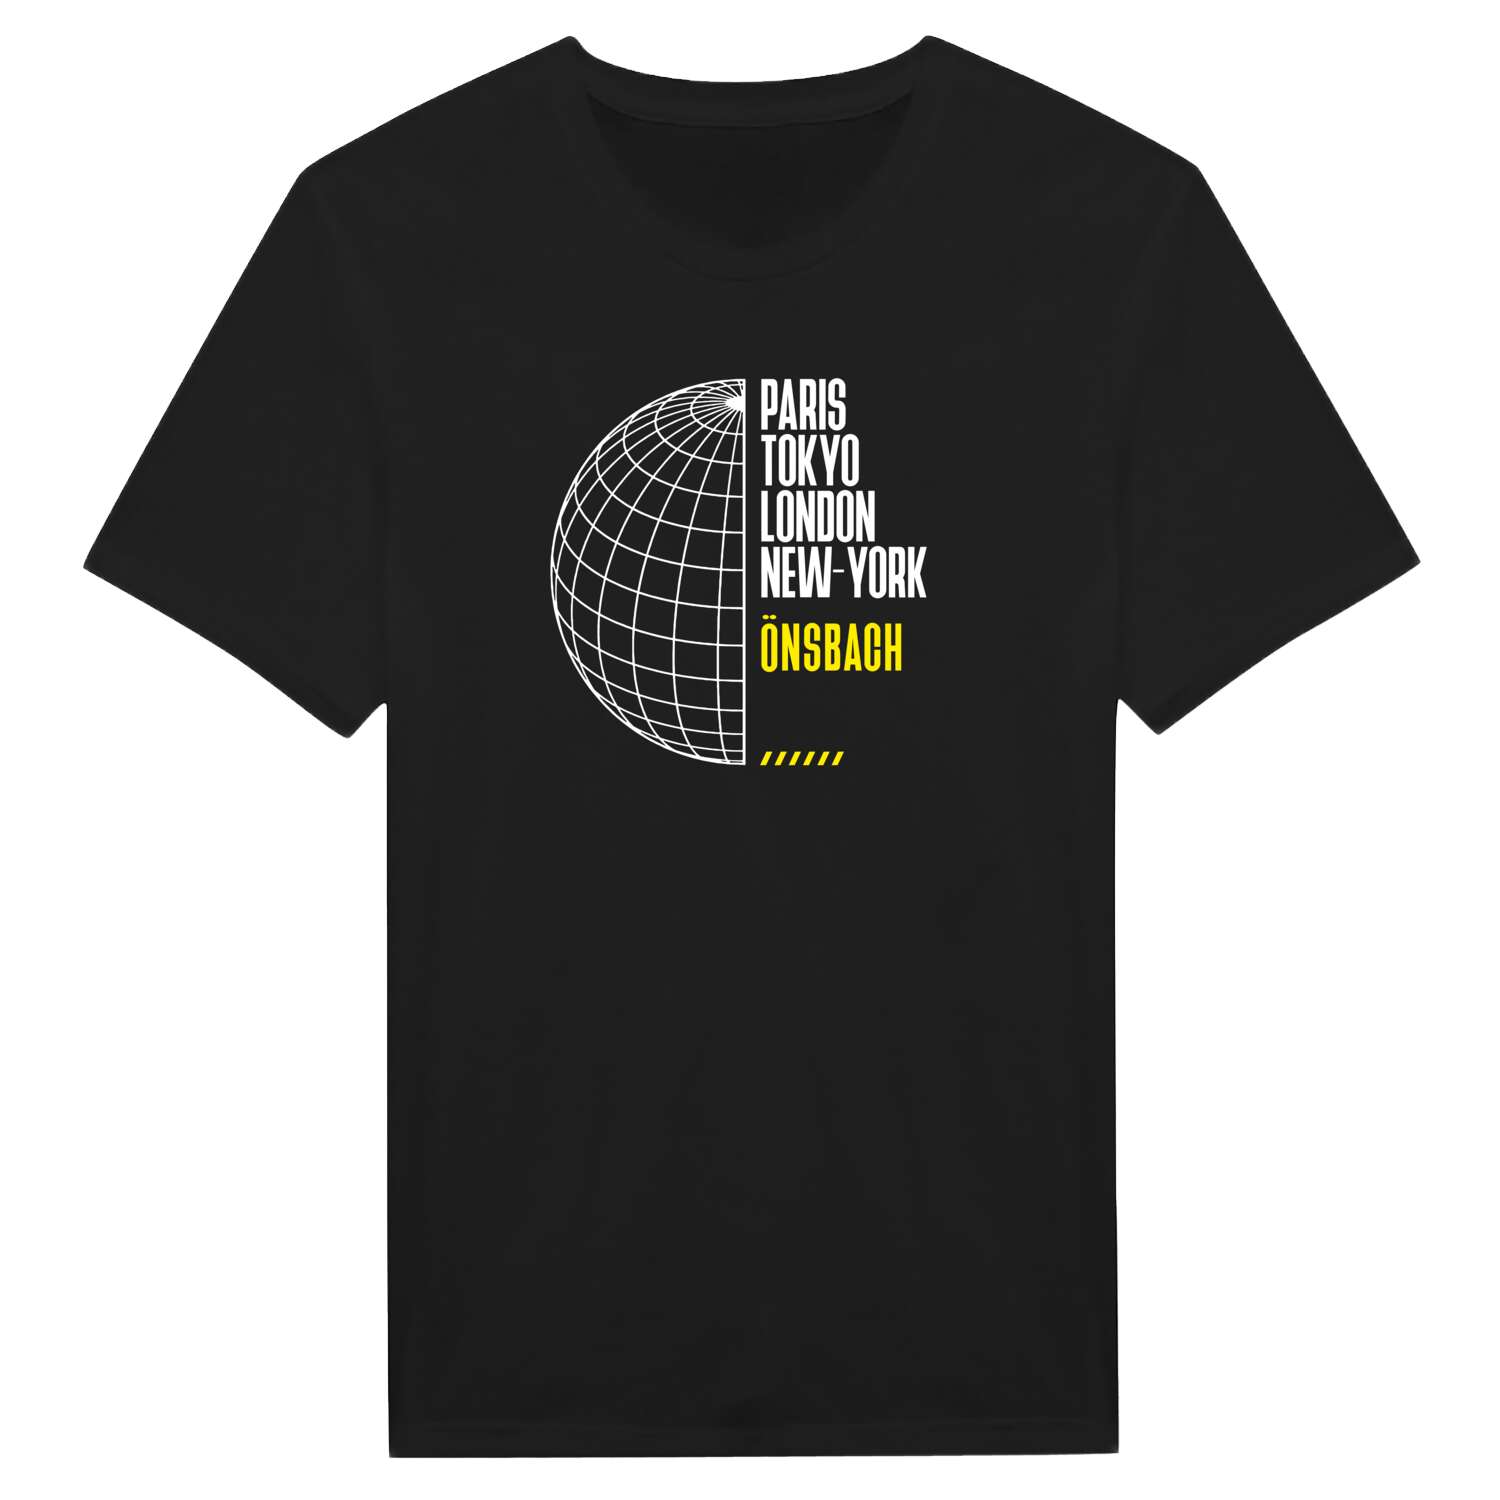 Önsbach T-Shirt »Paris Tokyo London«